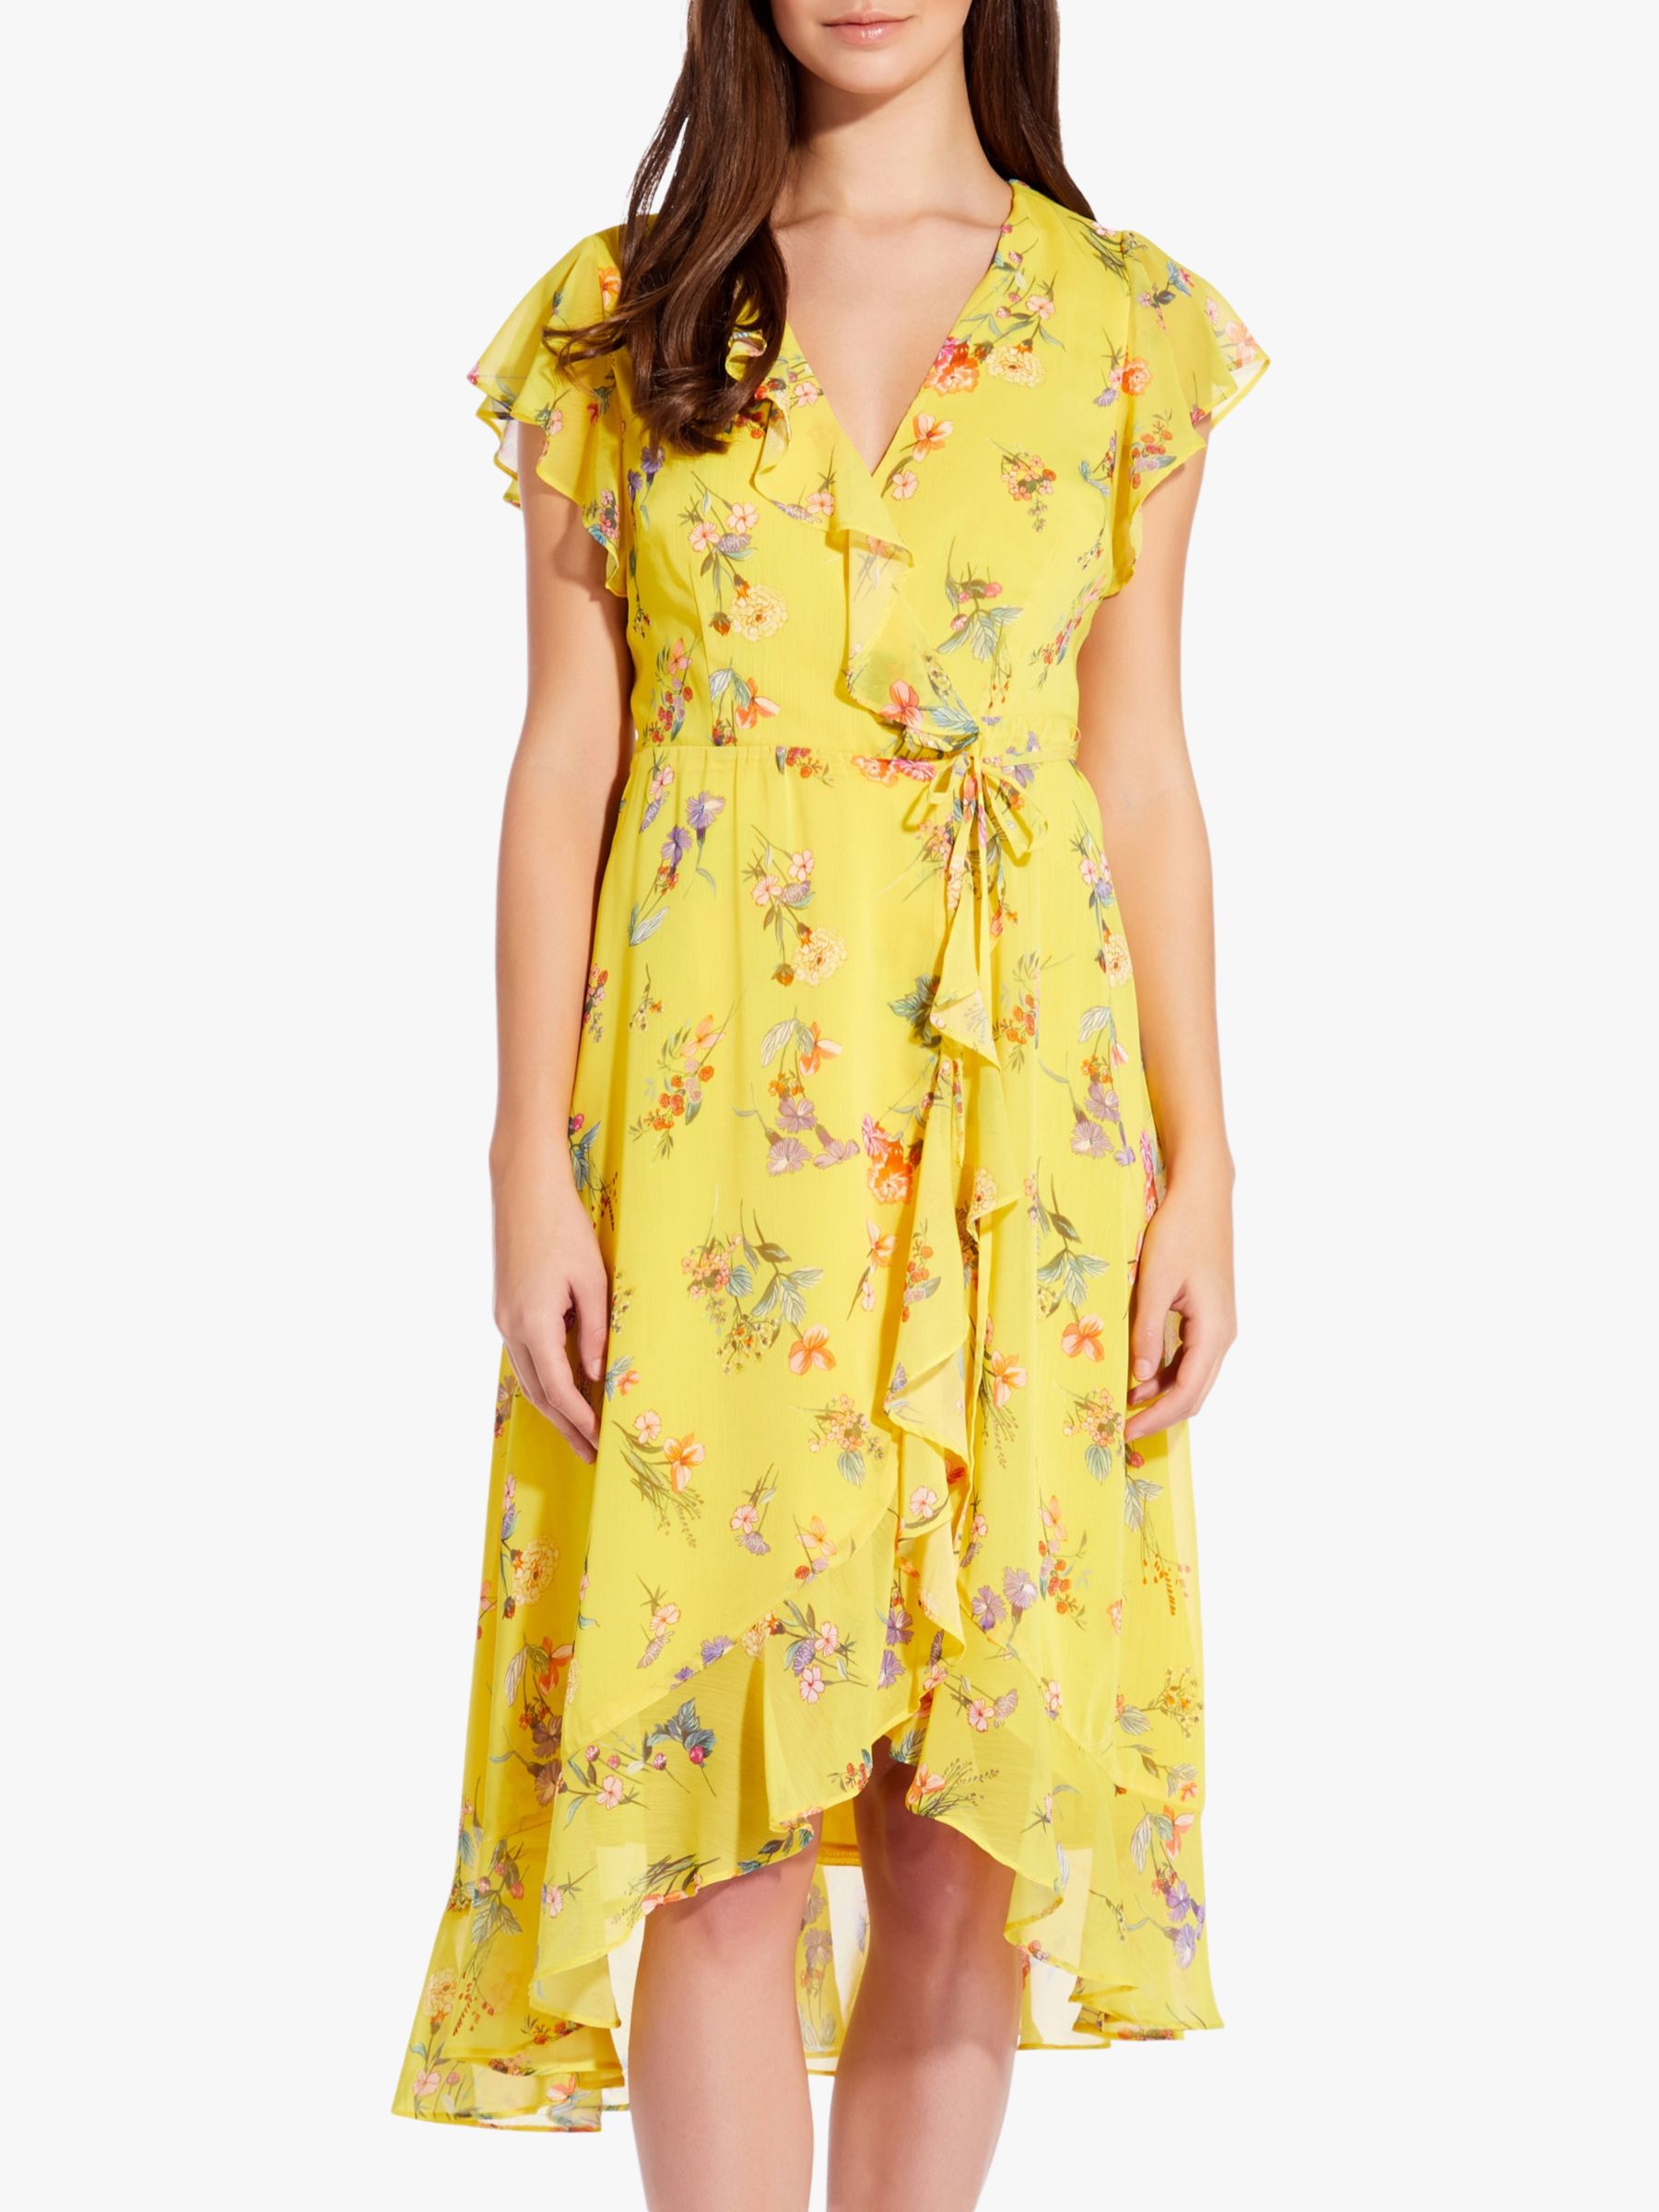 Adrianna Papell Sunny Corsage Dress, Yellow/Multi